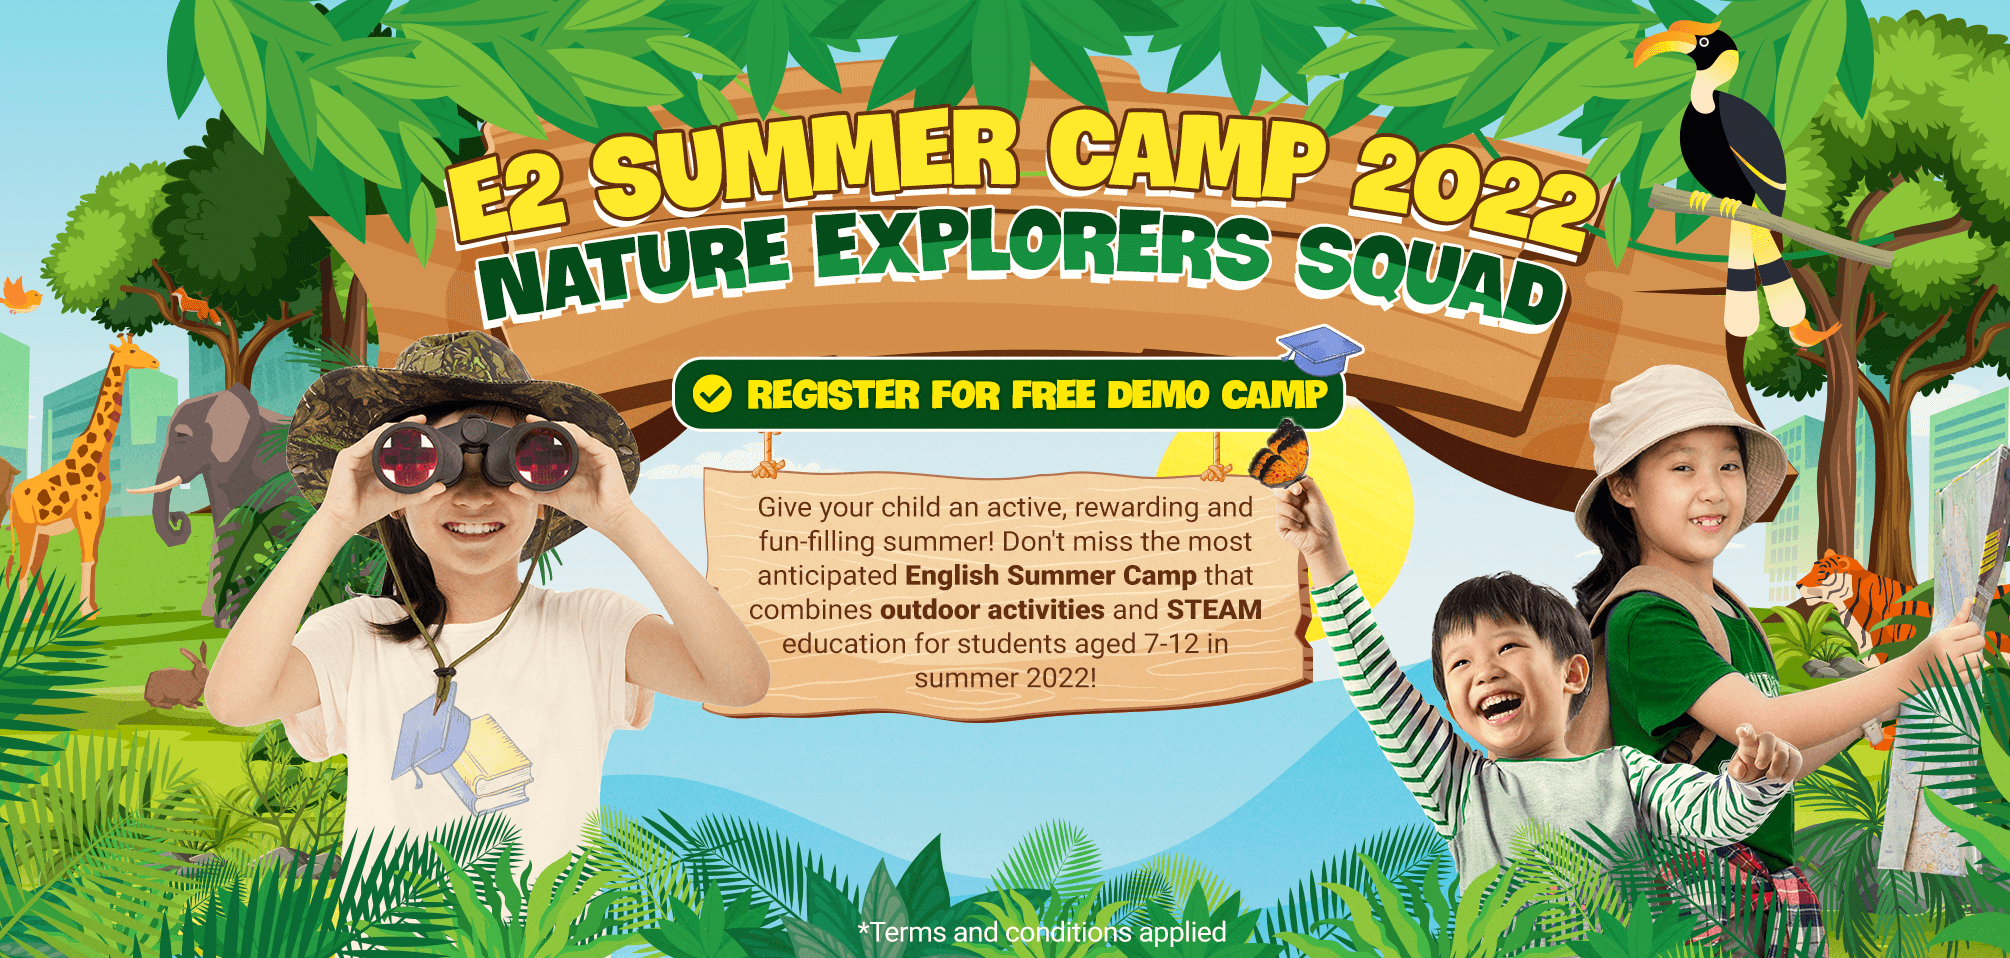 e2-summer-camp-2022-landing-page-banner-desktop